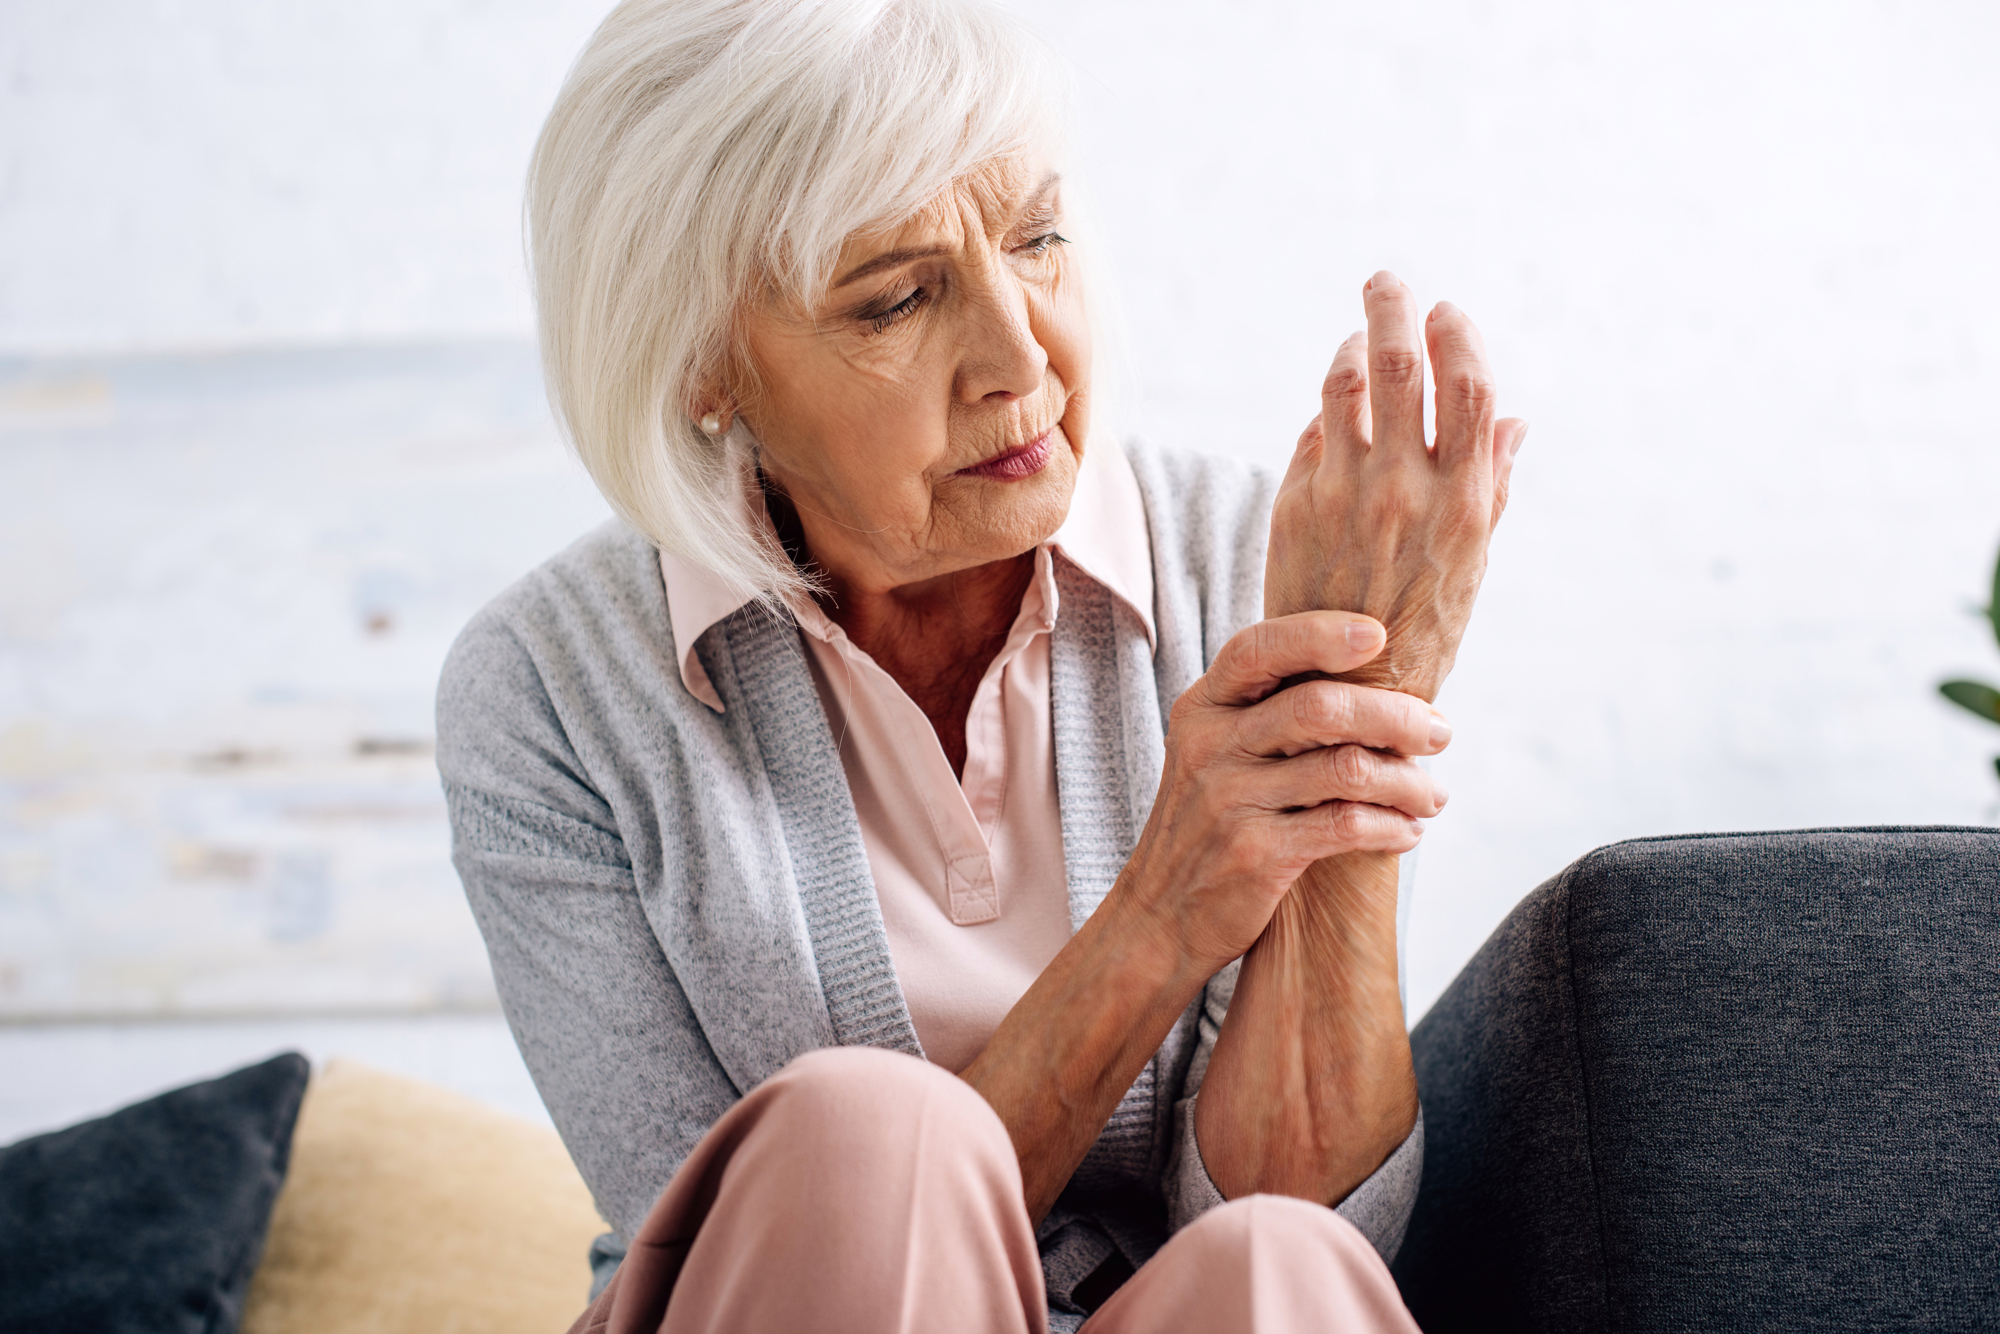 Revmatoidni artritis ni obsodba, ampak obvladljiva bolezen